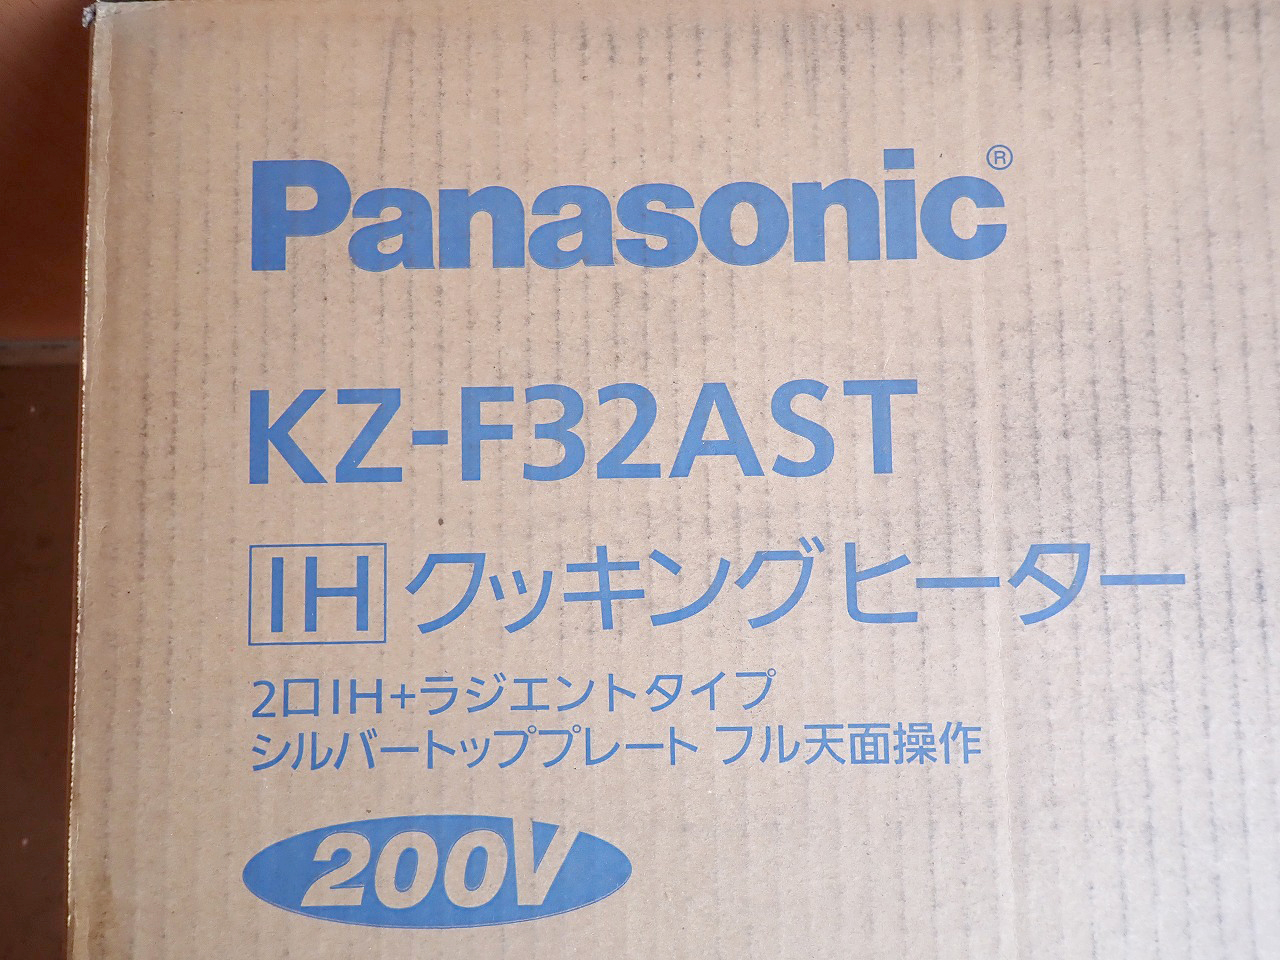 KZ-F32AST